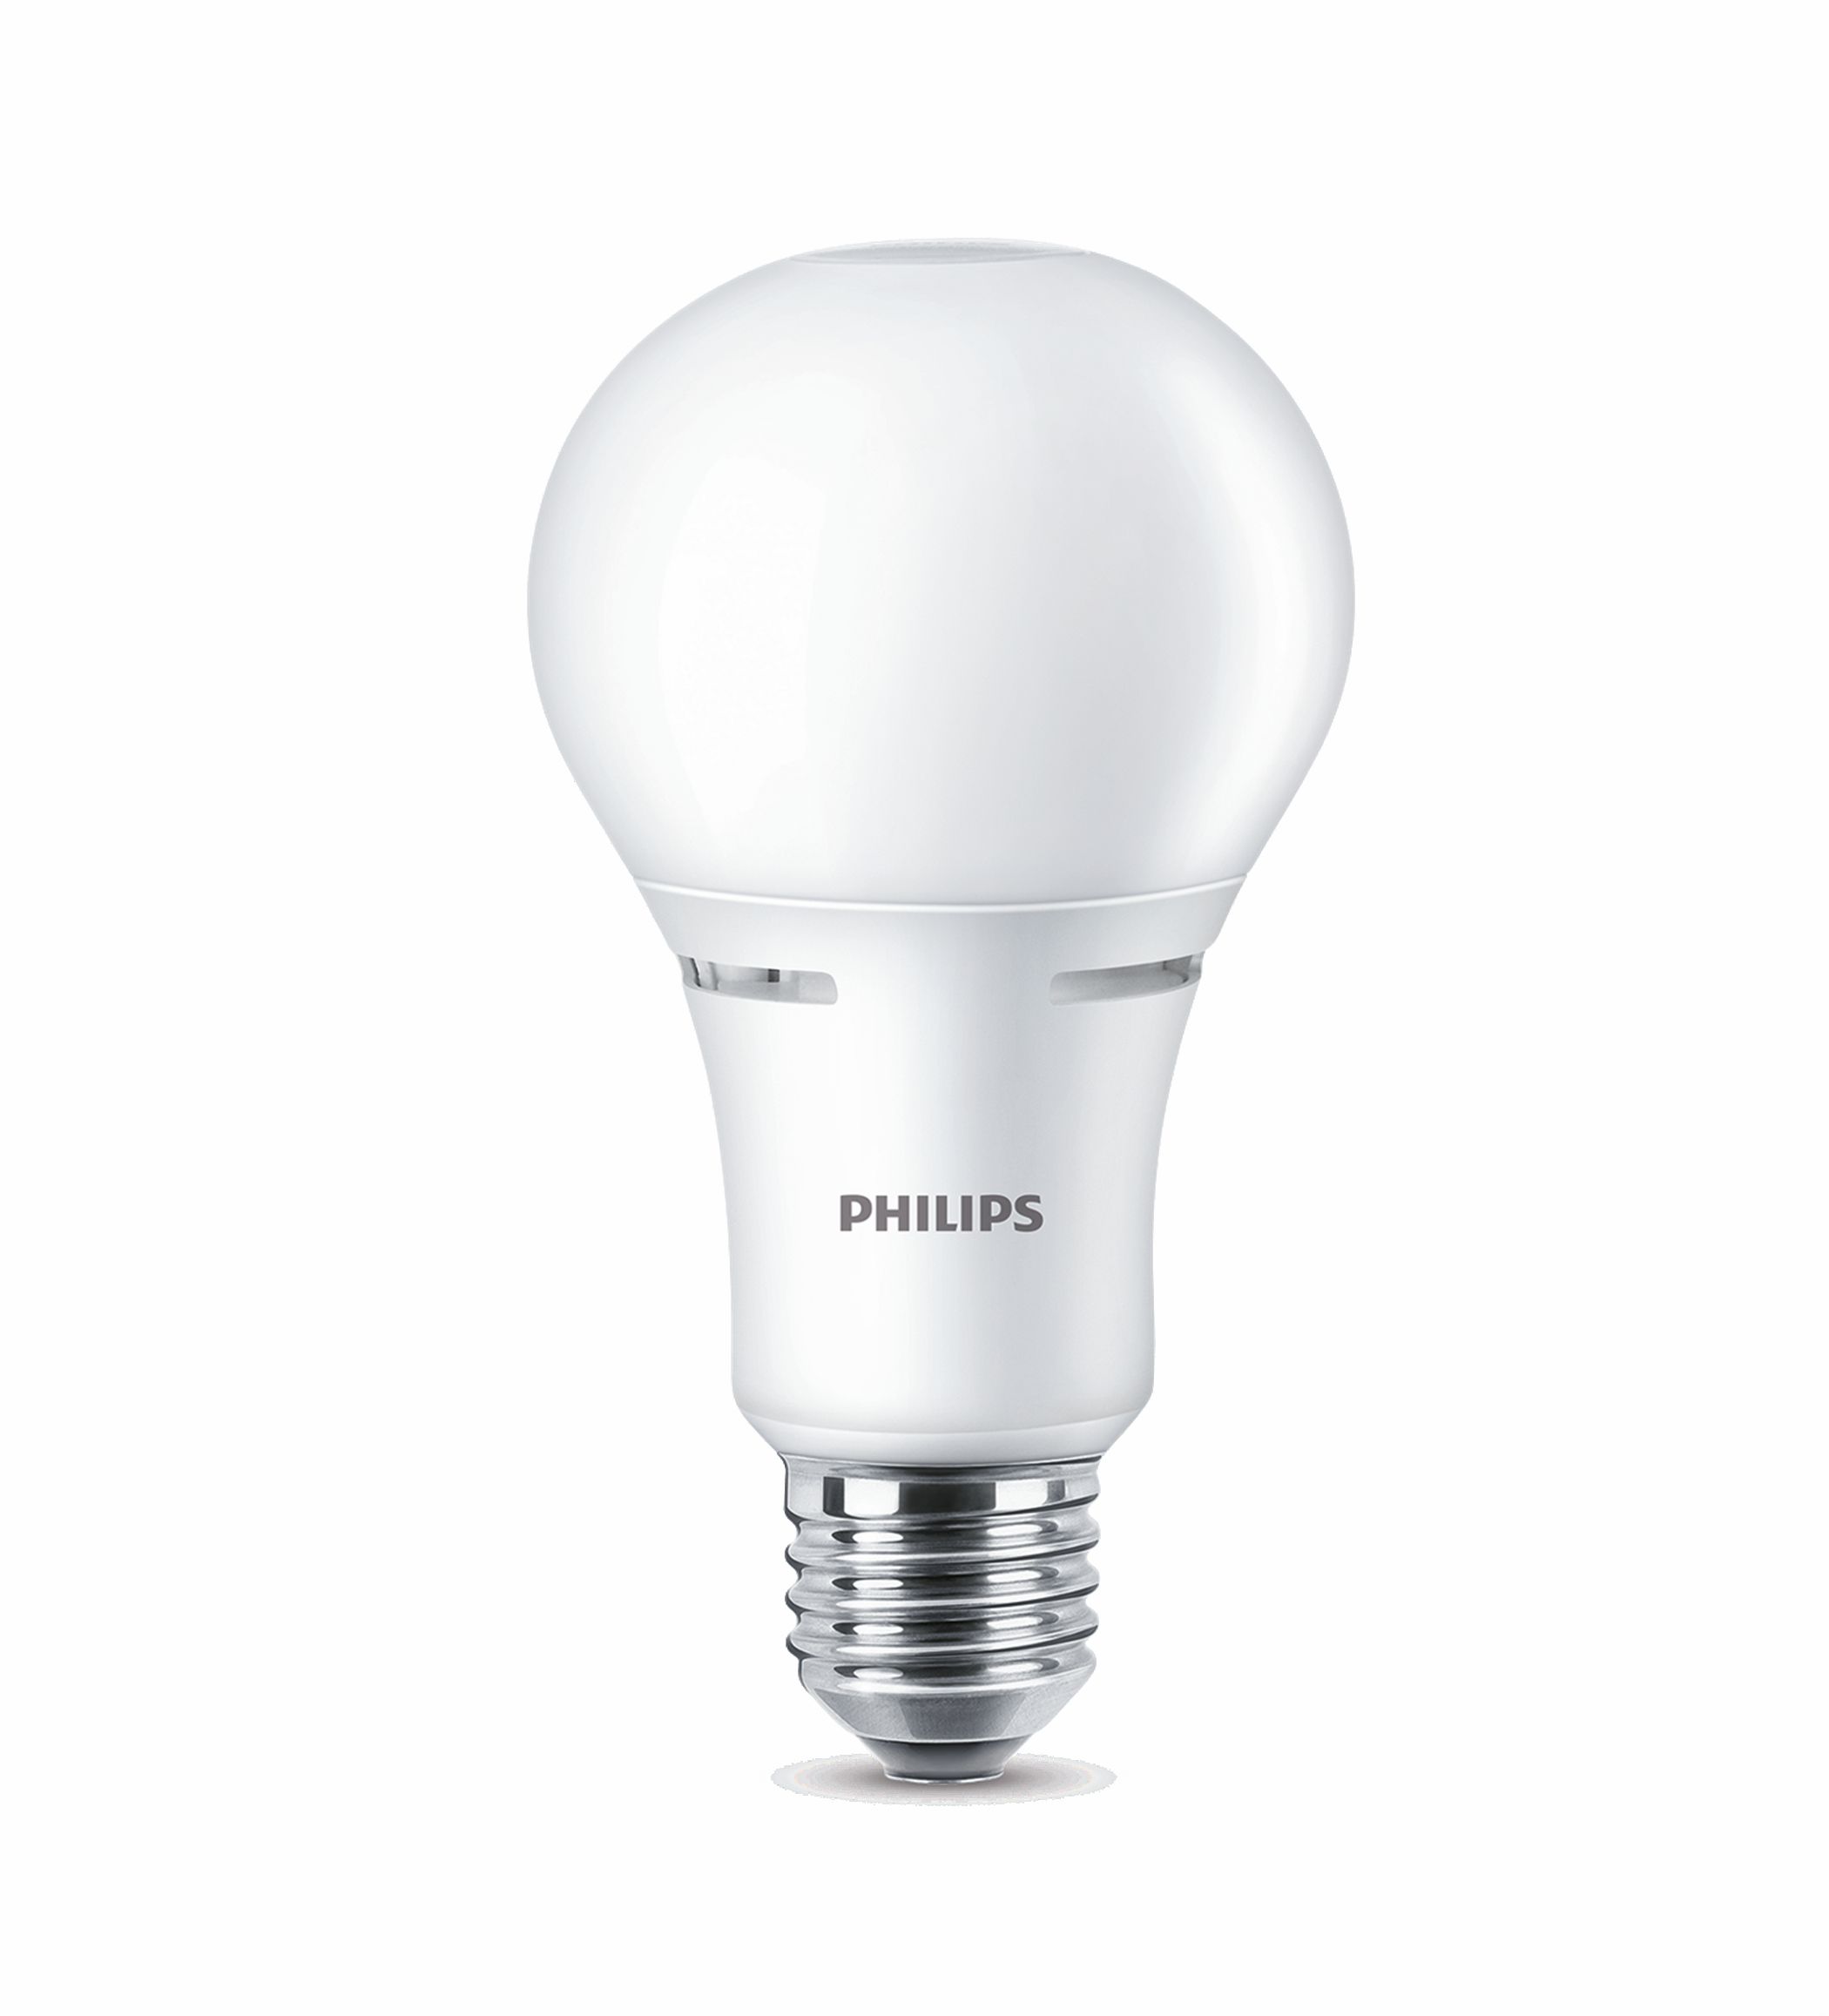 Philips myliving 532592916 n 3 Glühbirne Surfaced lighting spot 3 W LED 27